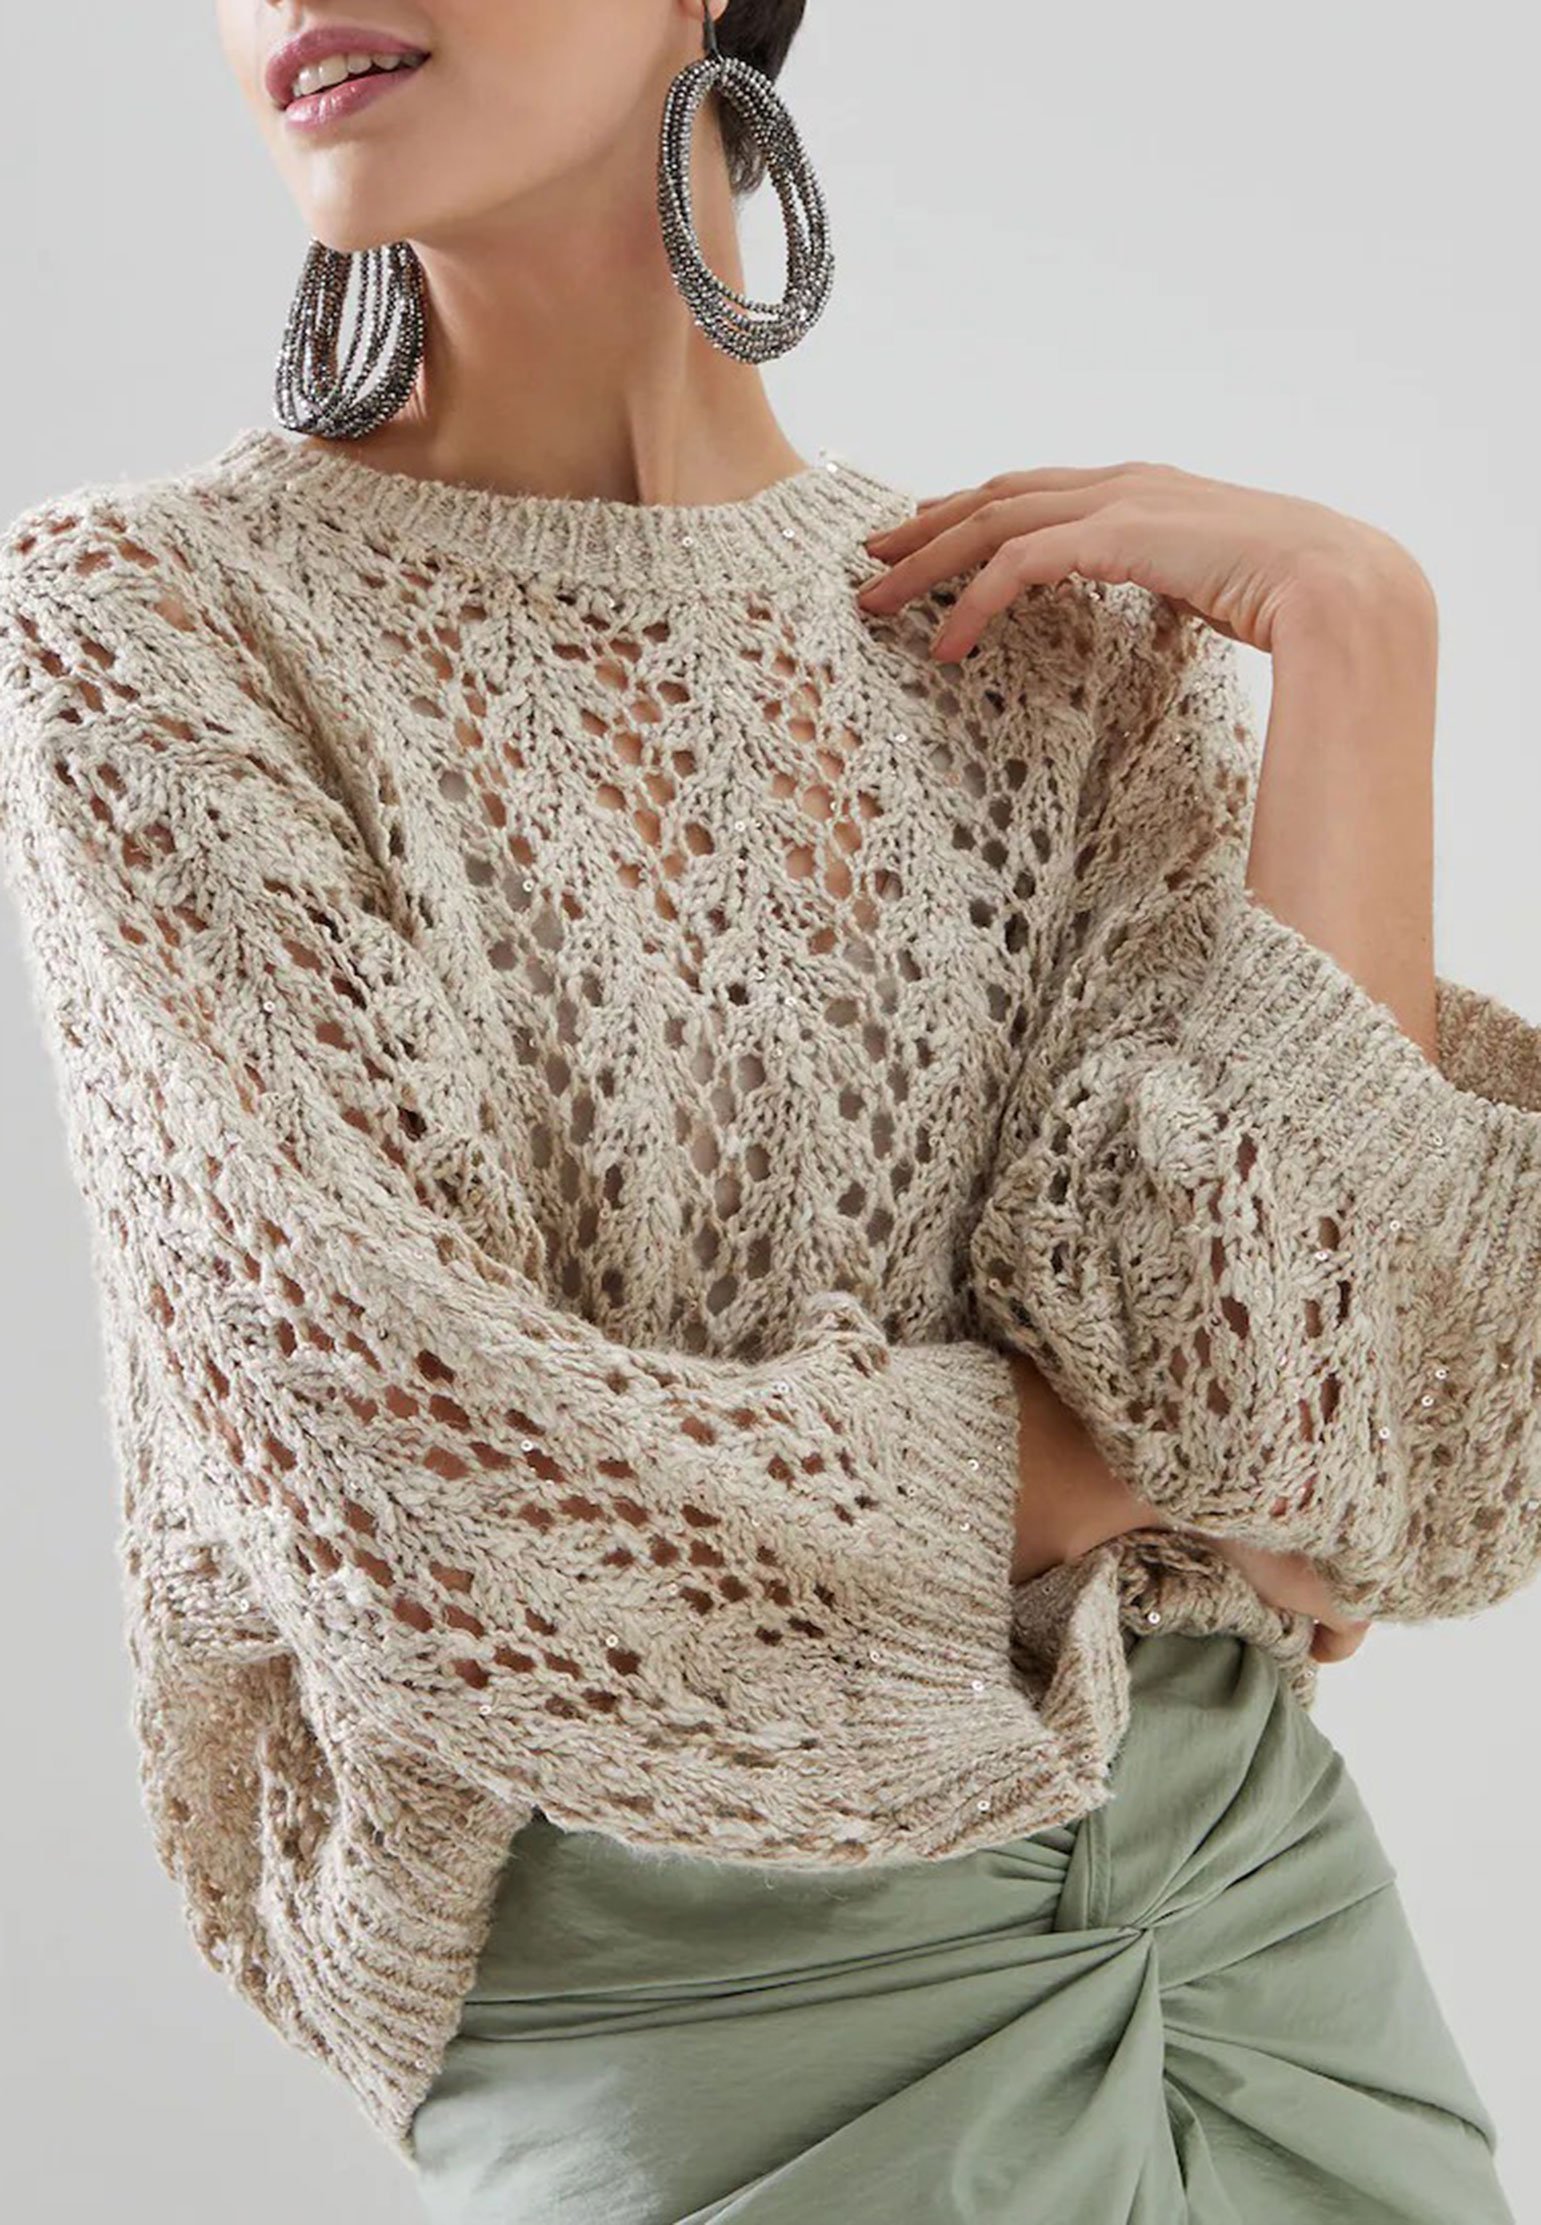 Sweater BRUNELLO CUCINELLI Color: beige (Code: 204) in online store Allure